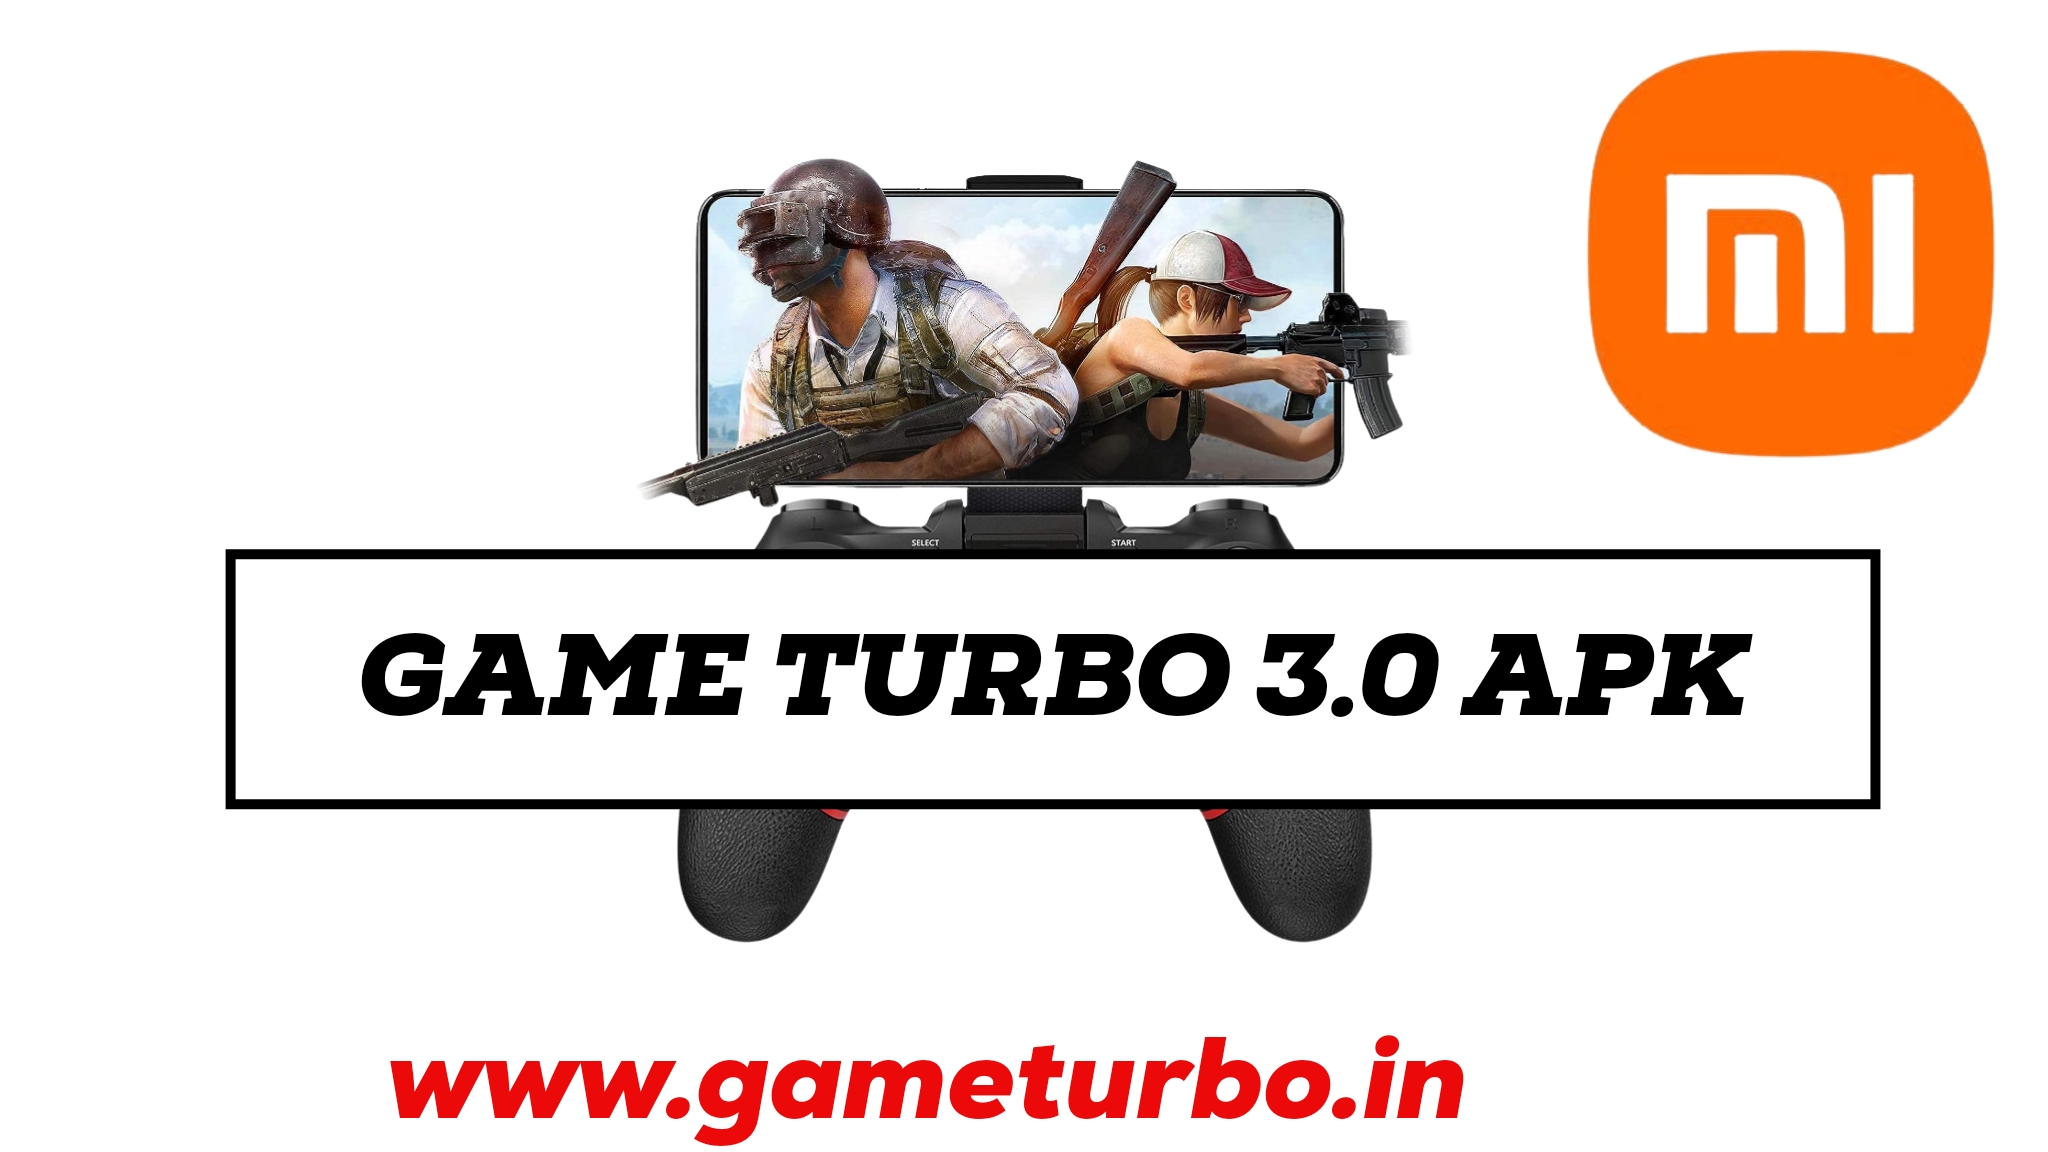 GAME TURBO 3.0 APK DOWNLOAD